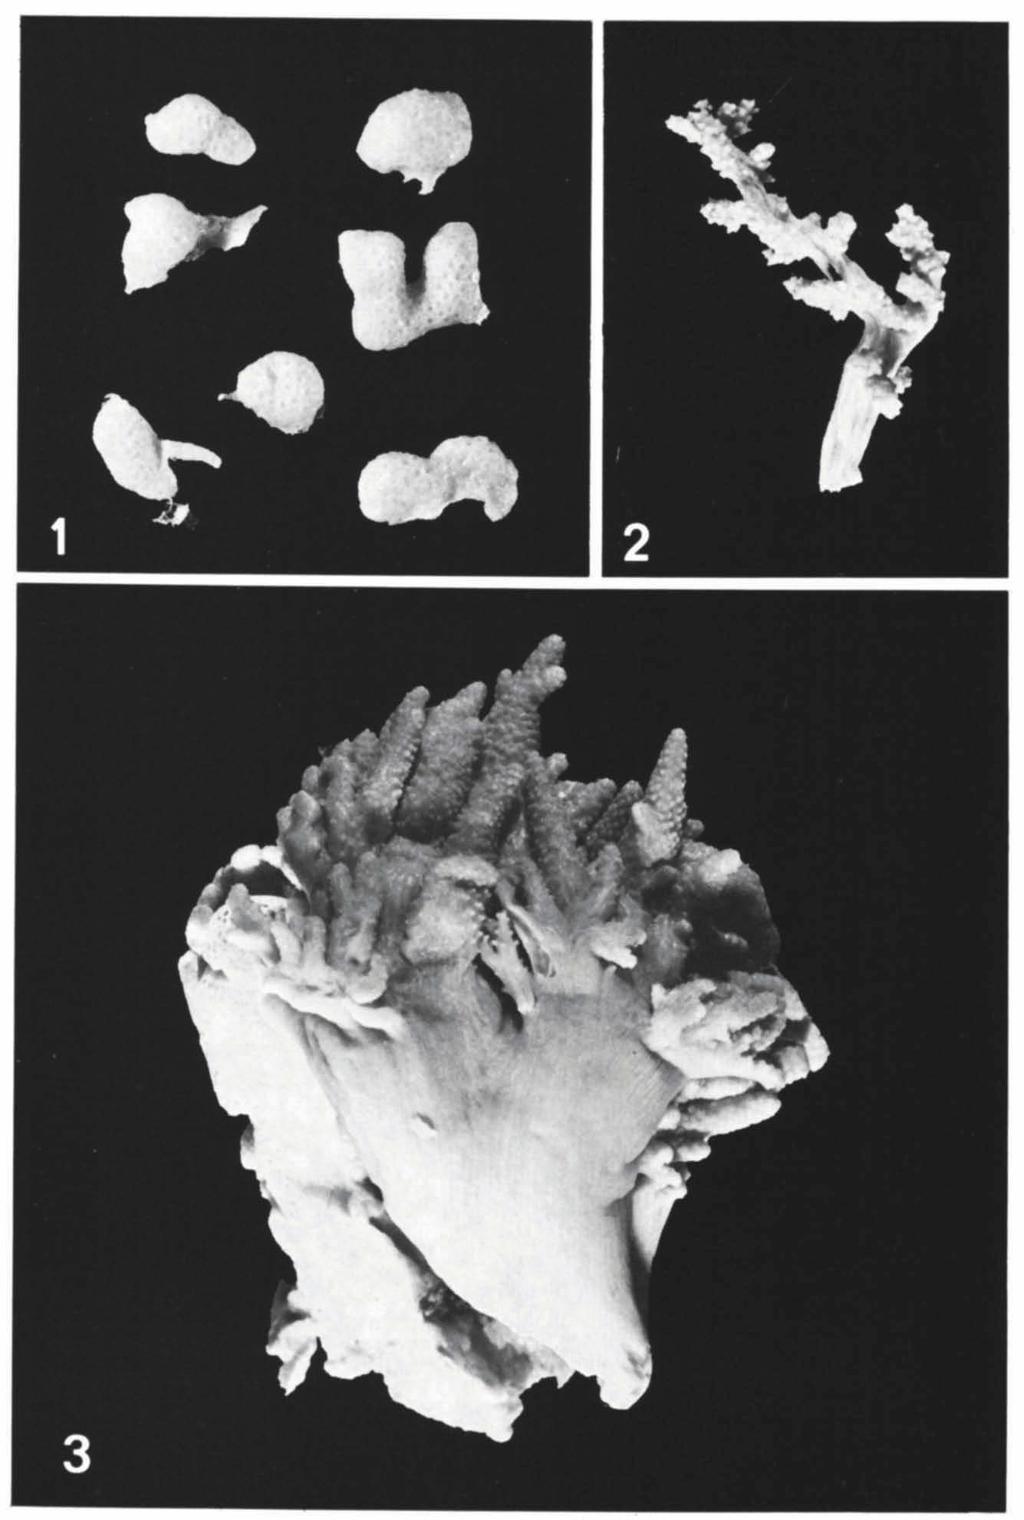 ZOOLOGISCHE MEDEDELINGEN 56 (12) PL. Ι Fig. ι. Alcyonium monticulum sp. nov., holotype and paratypes, RMNH Coel. no. 13904 and 13905; X 1.